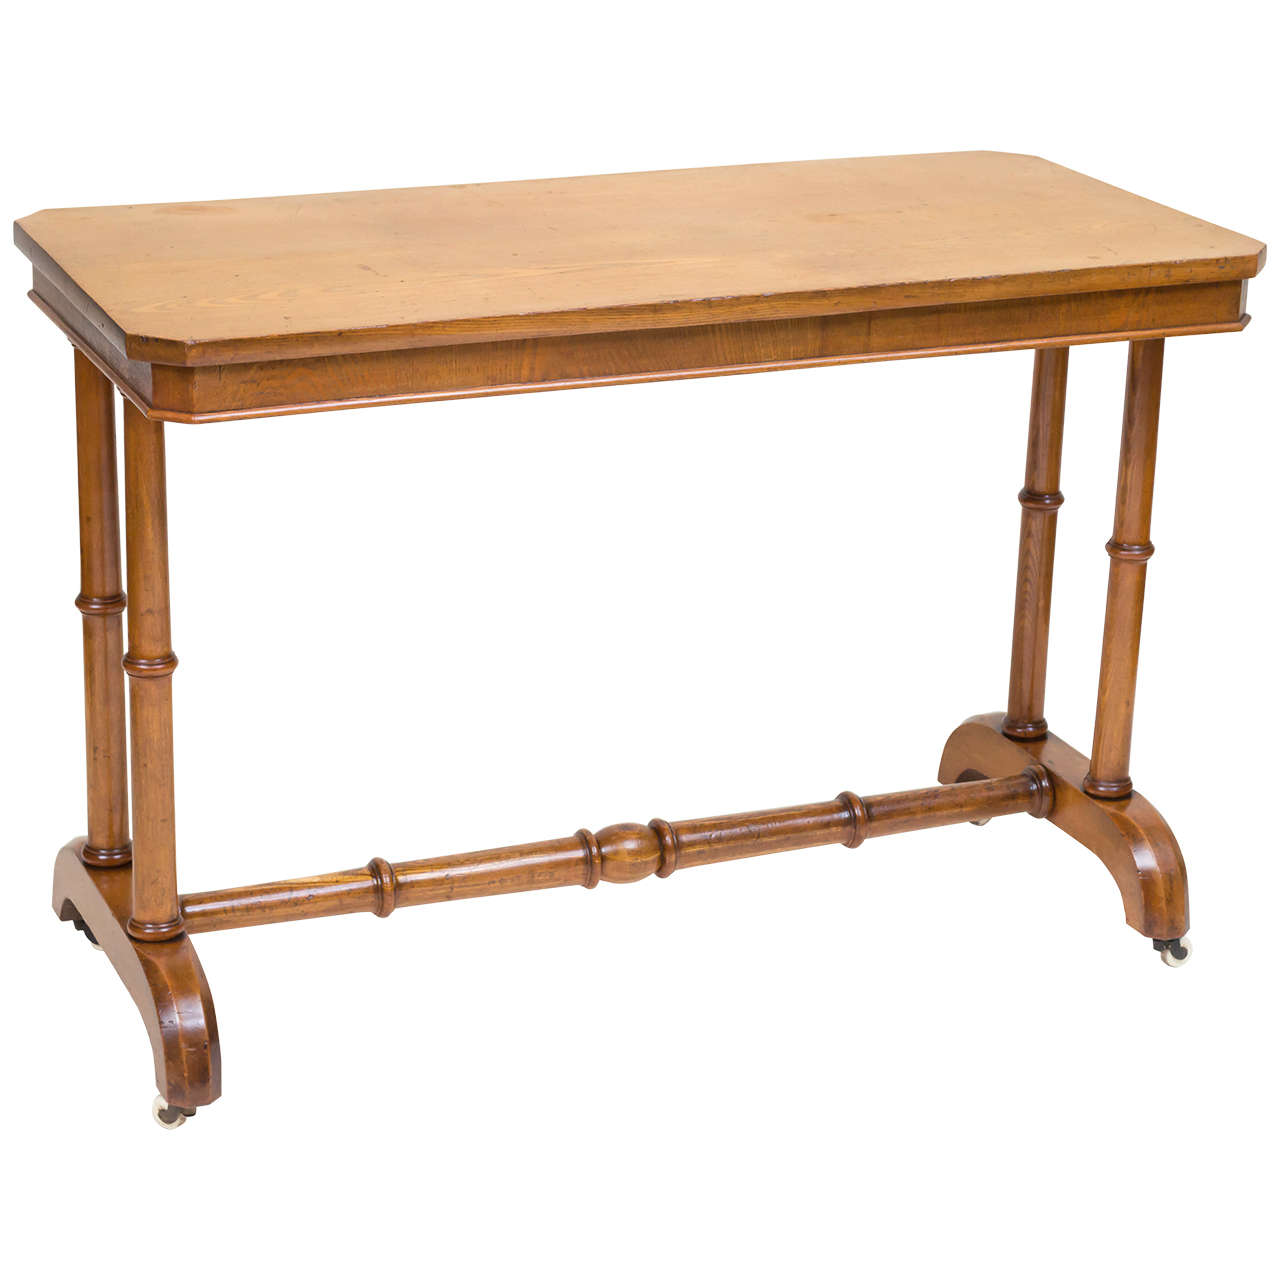 19th Century William IV Sofa or Writing Table